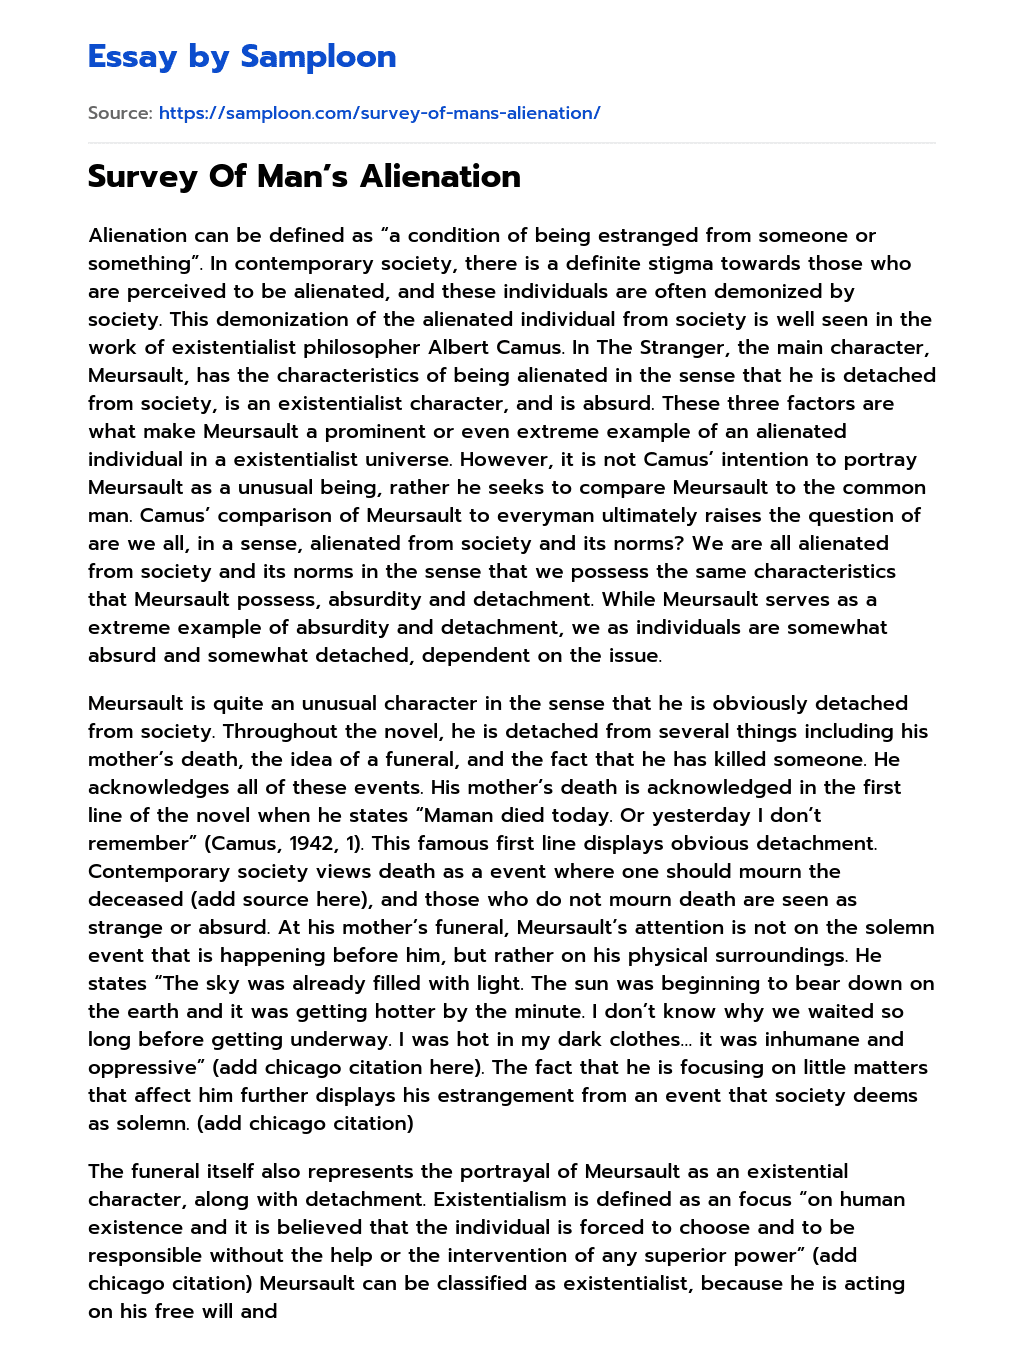 Survey Of Man’s Alienation essay